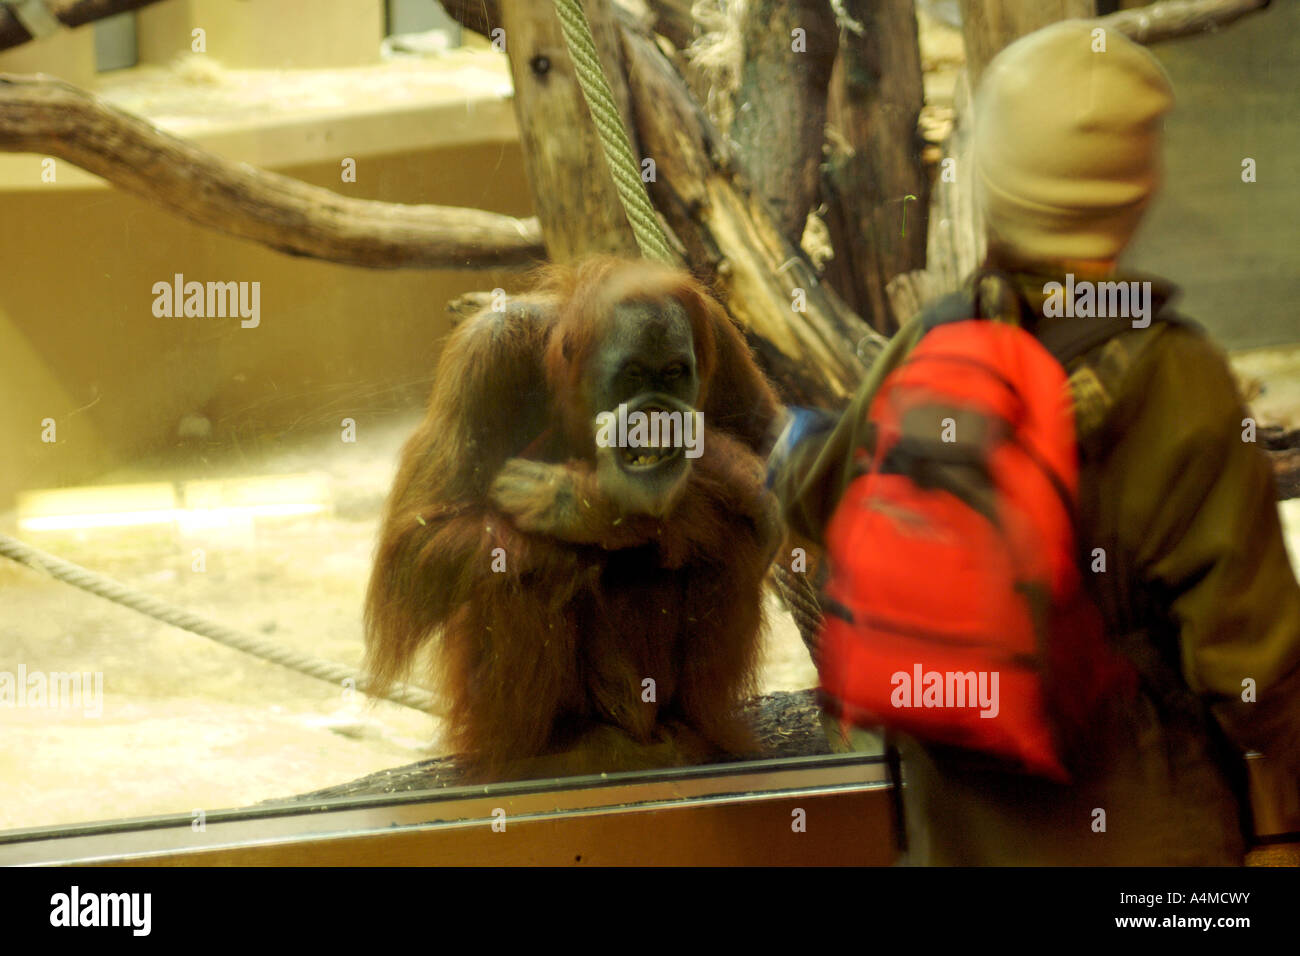 The orangutan enclosure of the Zürich zoo. Stock Photo